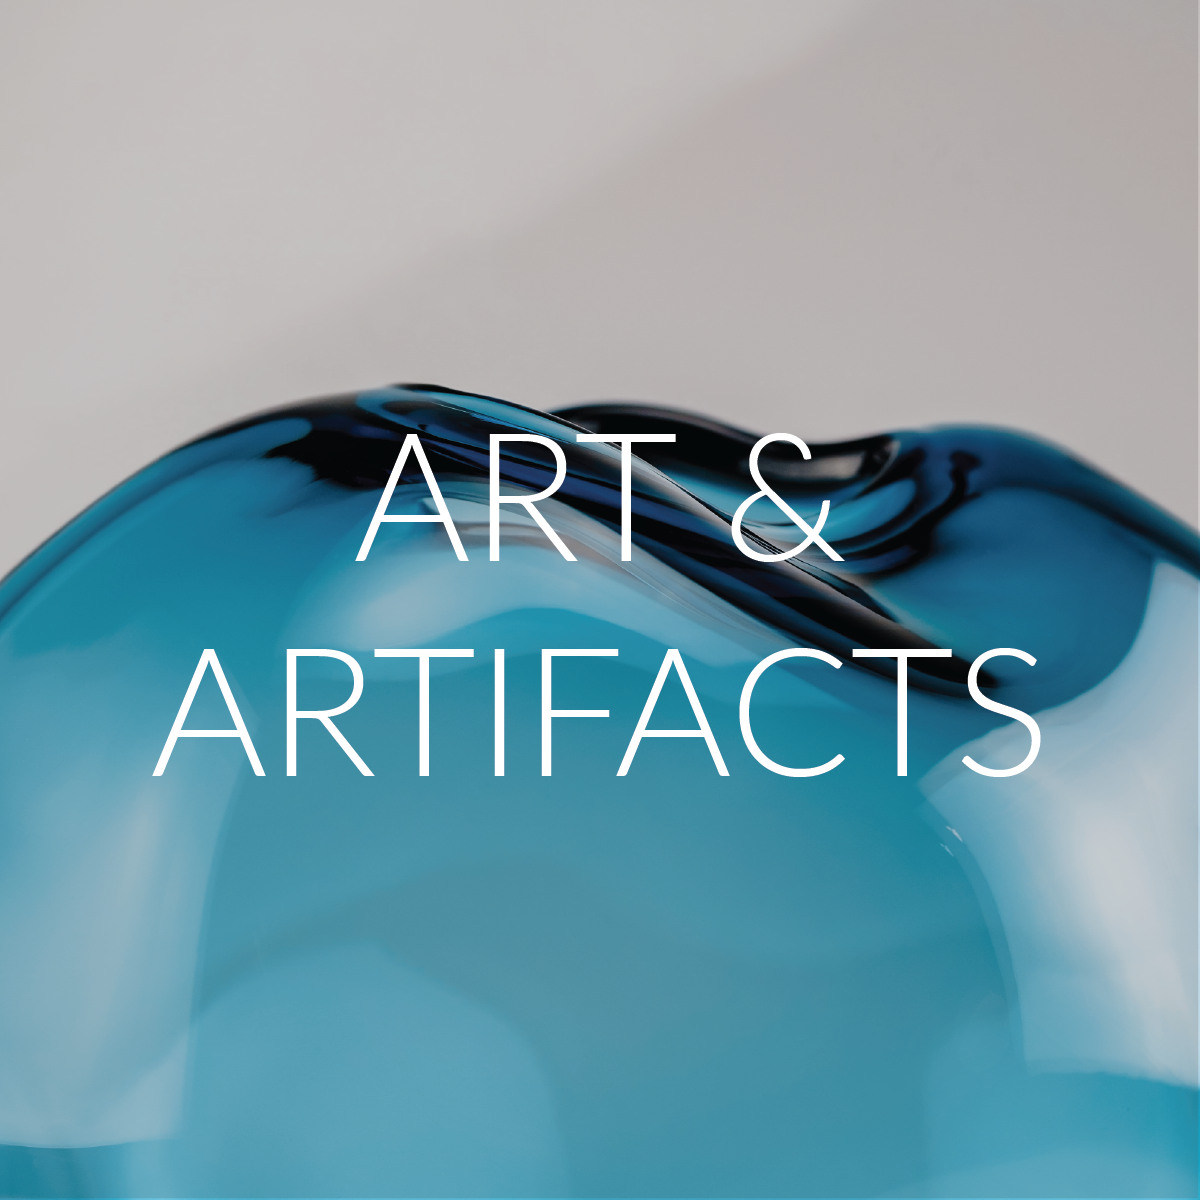 ART&ARTIFACTS.png